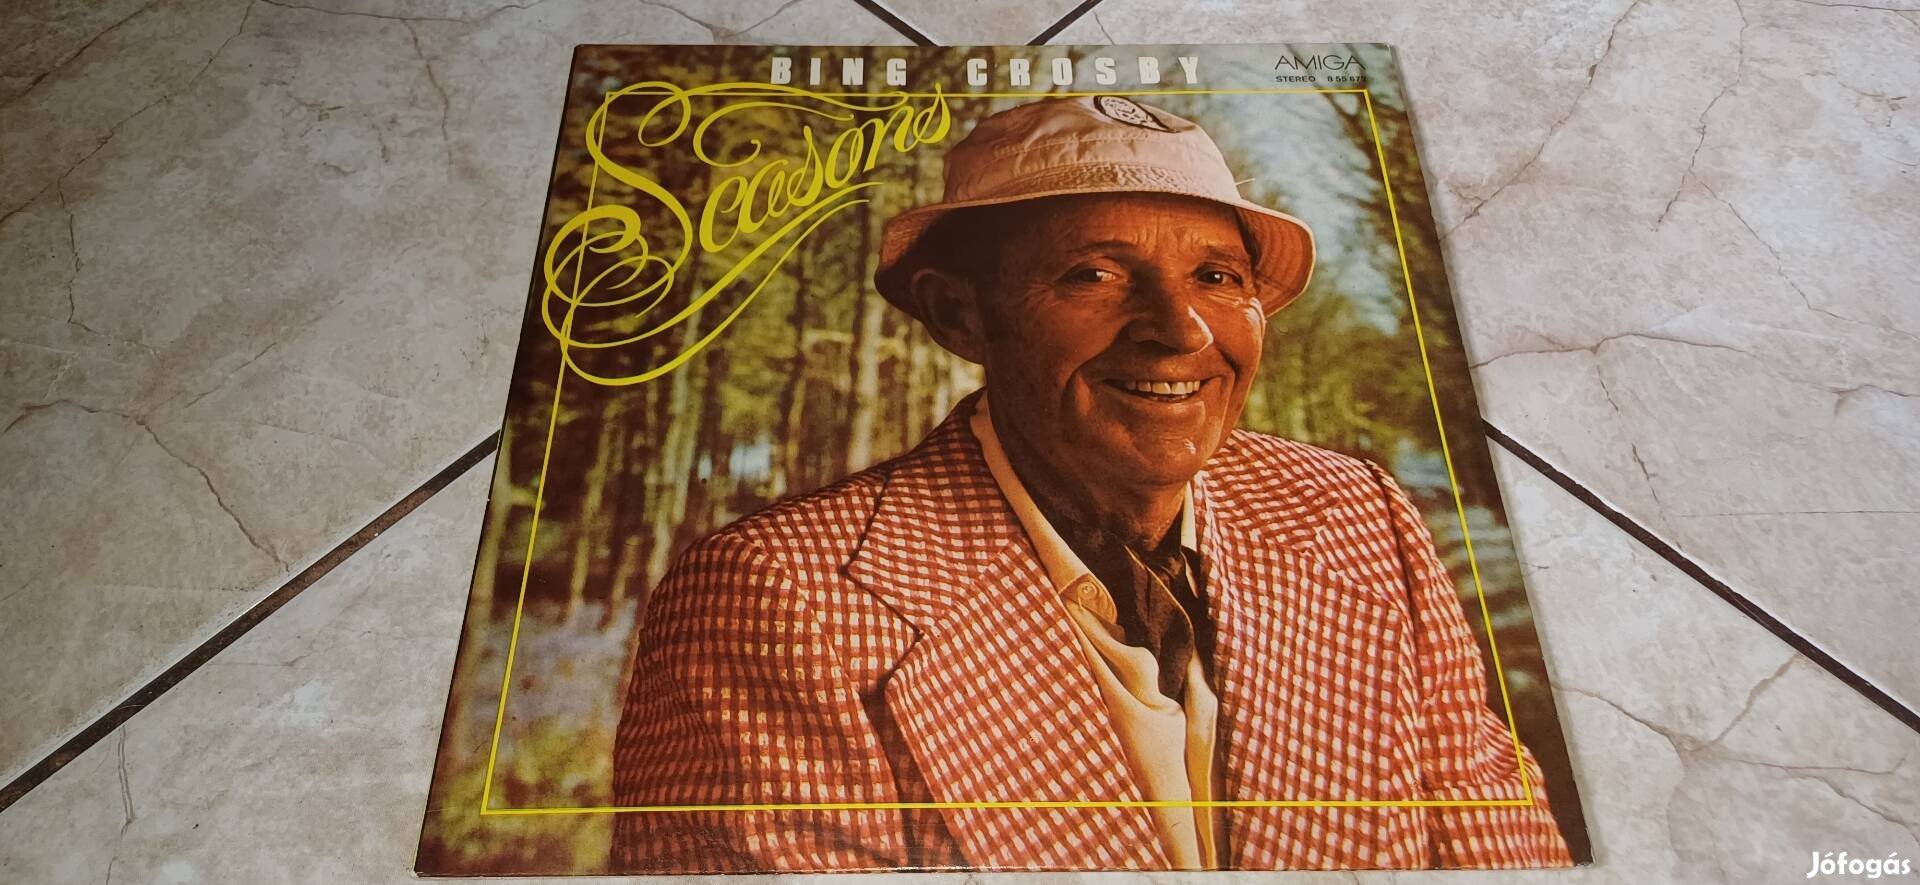 Bing Crosby bakelit lemez